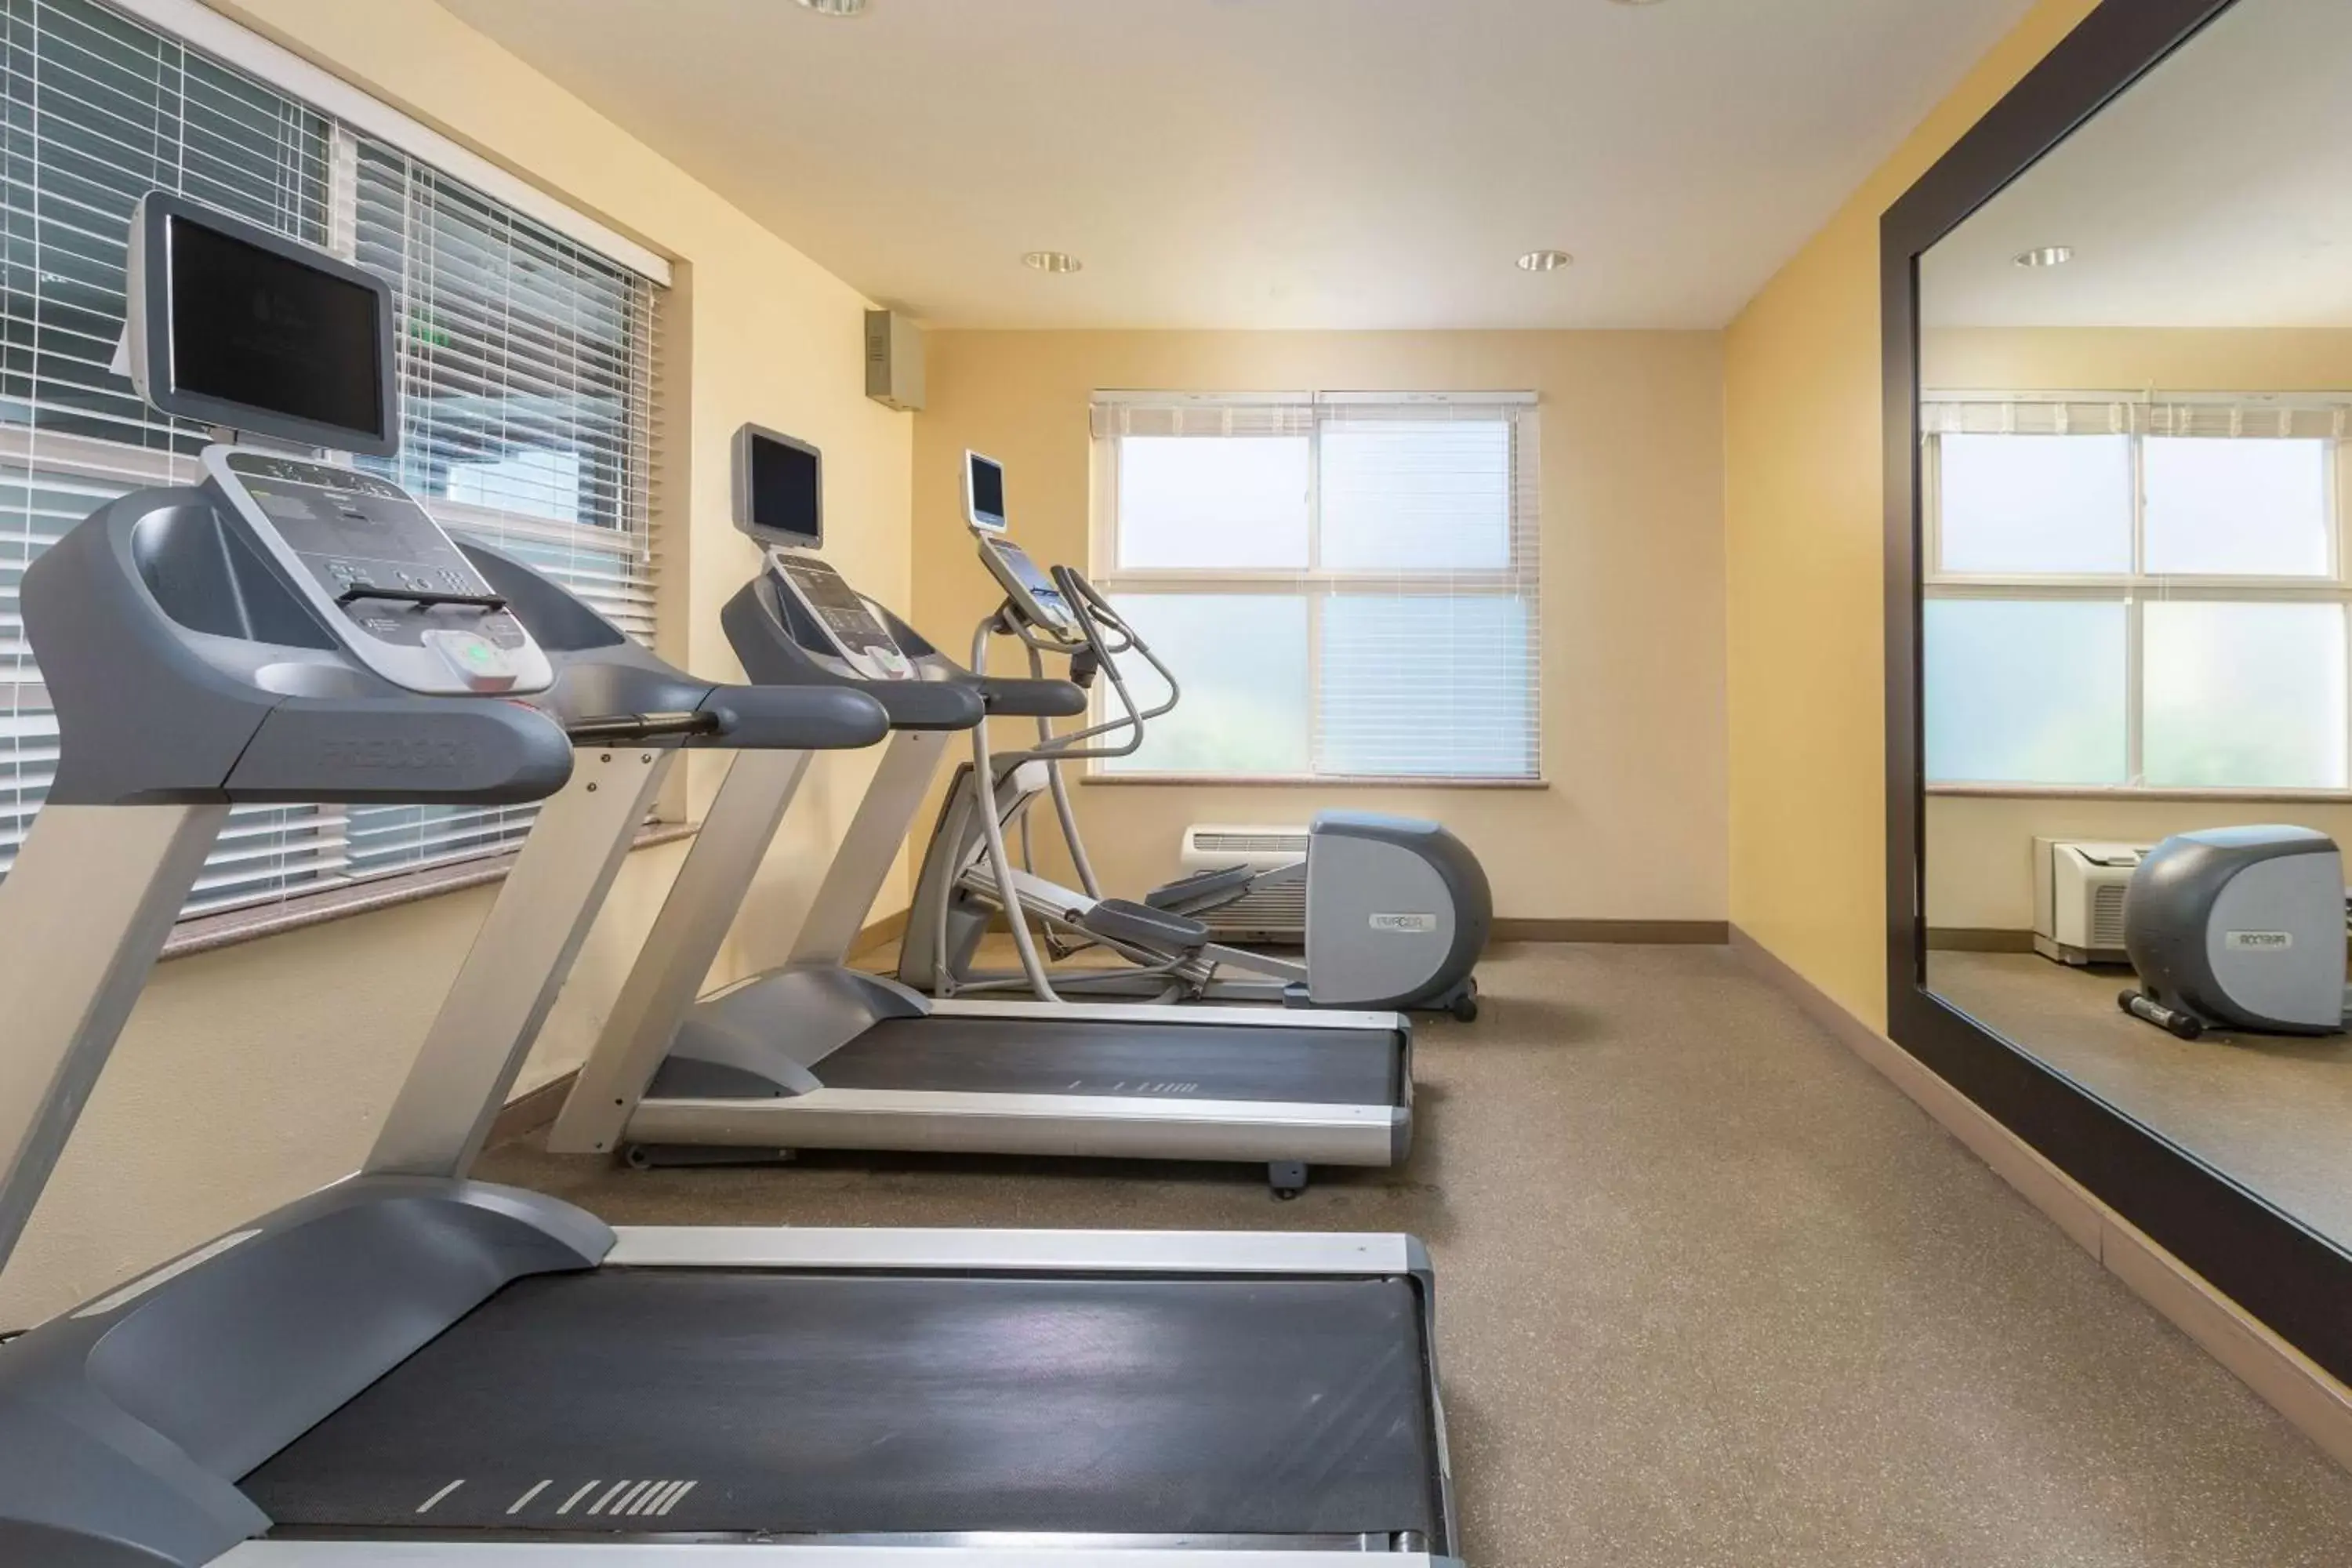 Fitness centre/facilities, Fitness Center/Facilities in Hilton Garden Inn Oakland/San Leandro